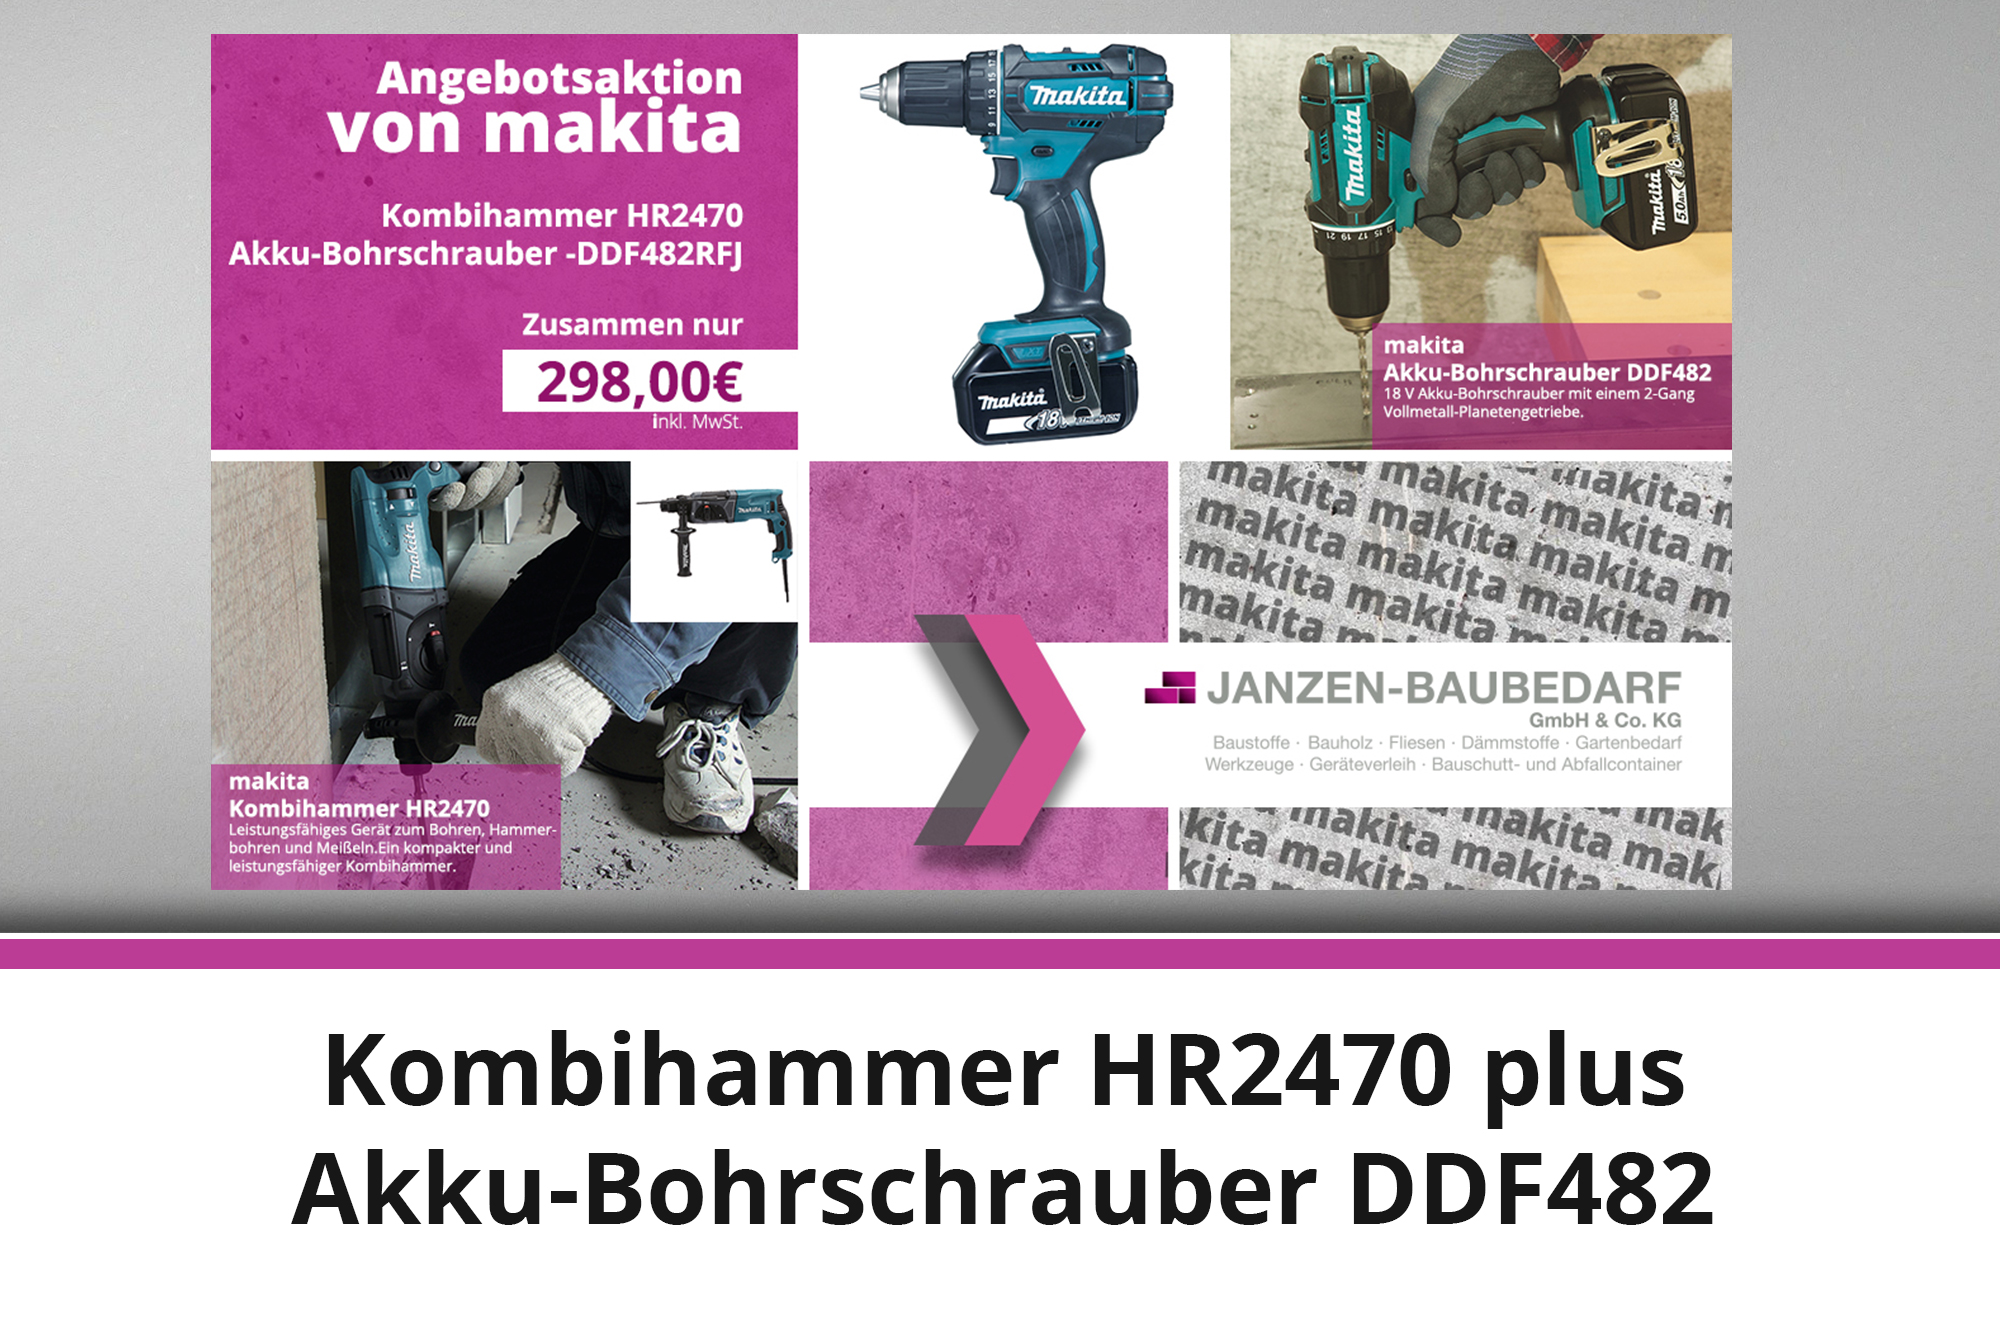 Kombihammer HR2470 plus Akku-Bohrschrauber DDF482